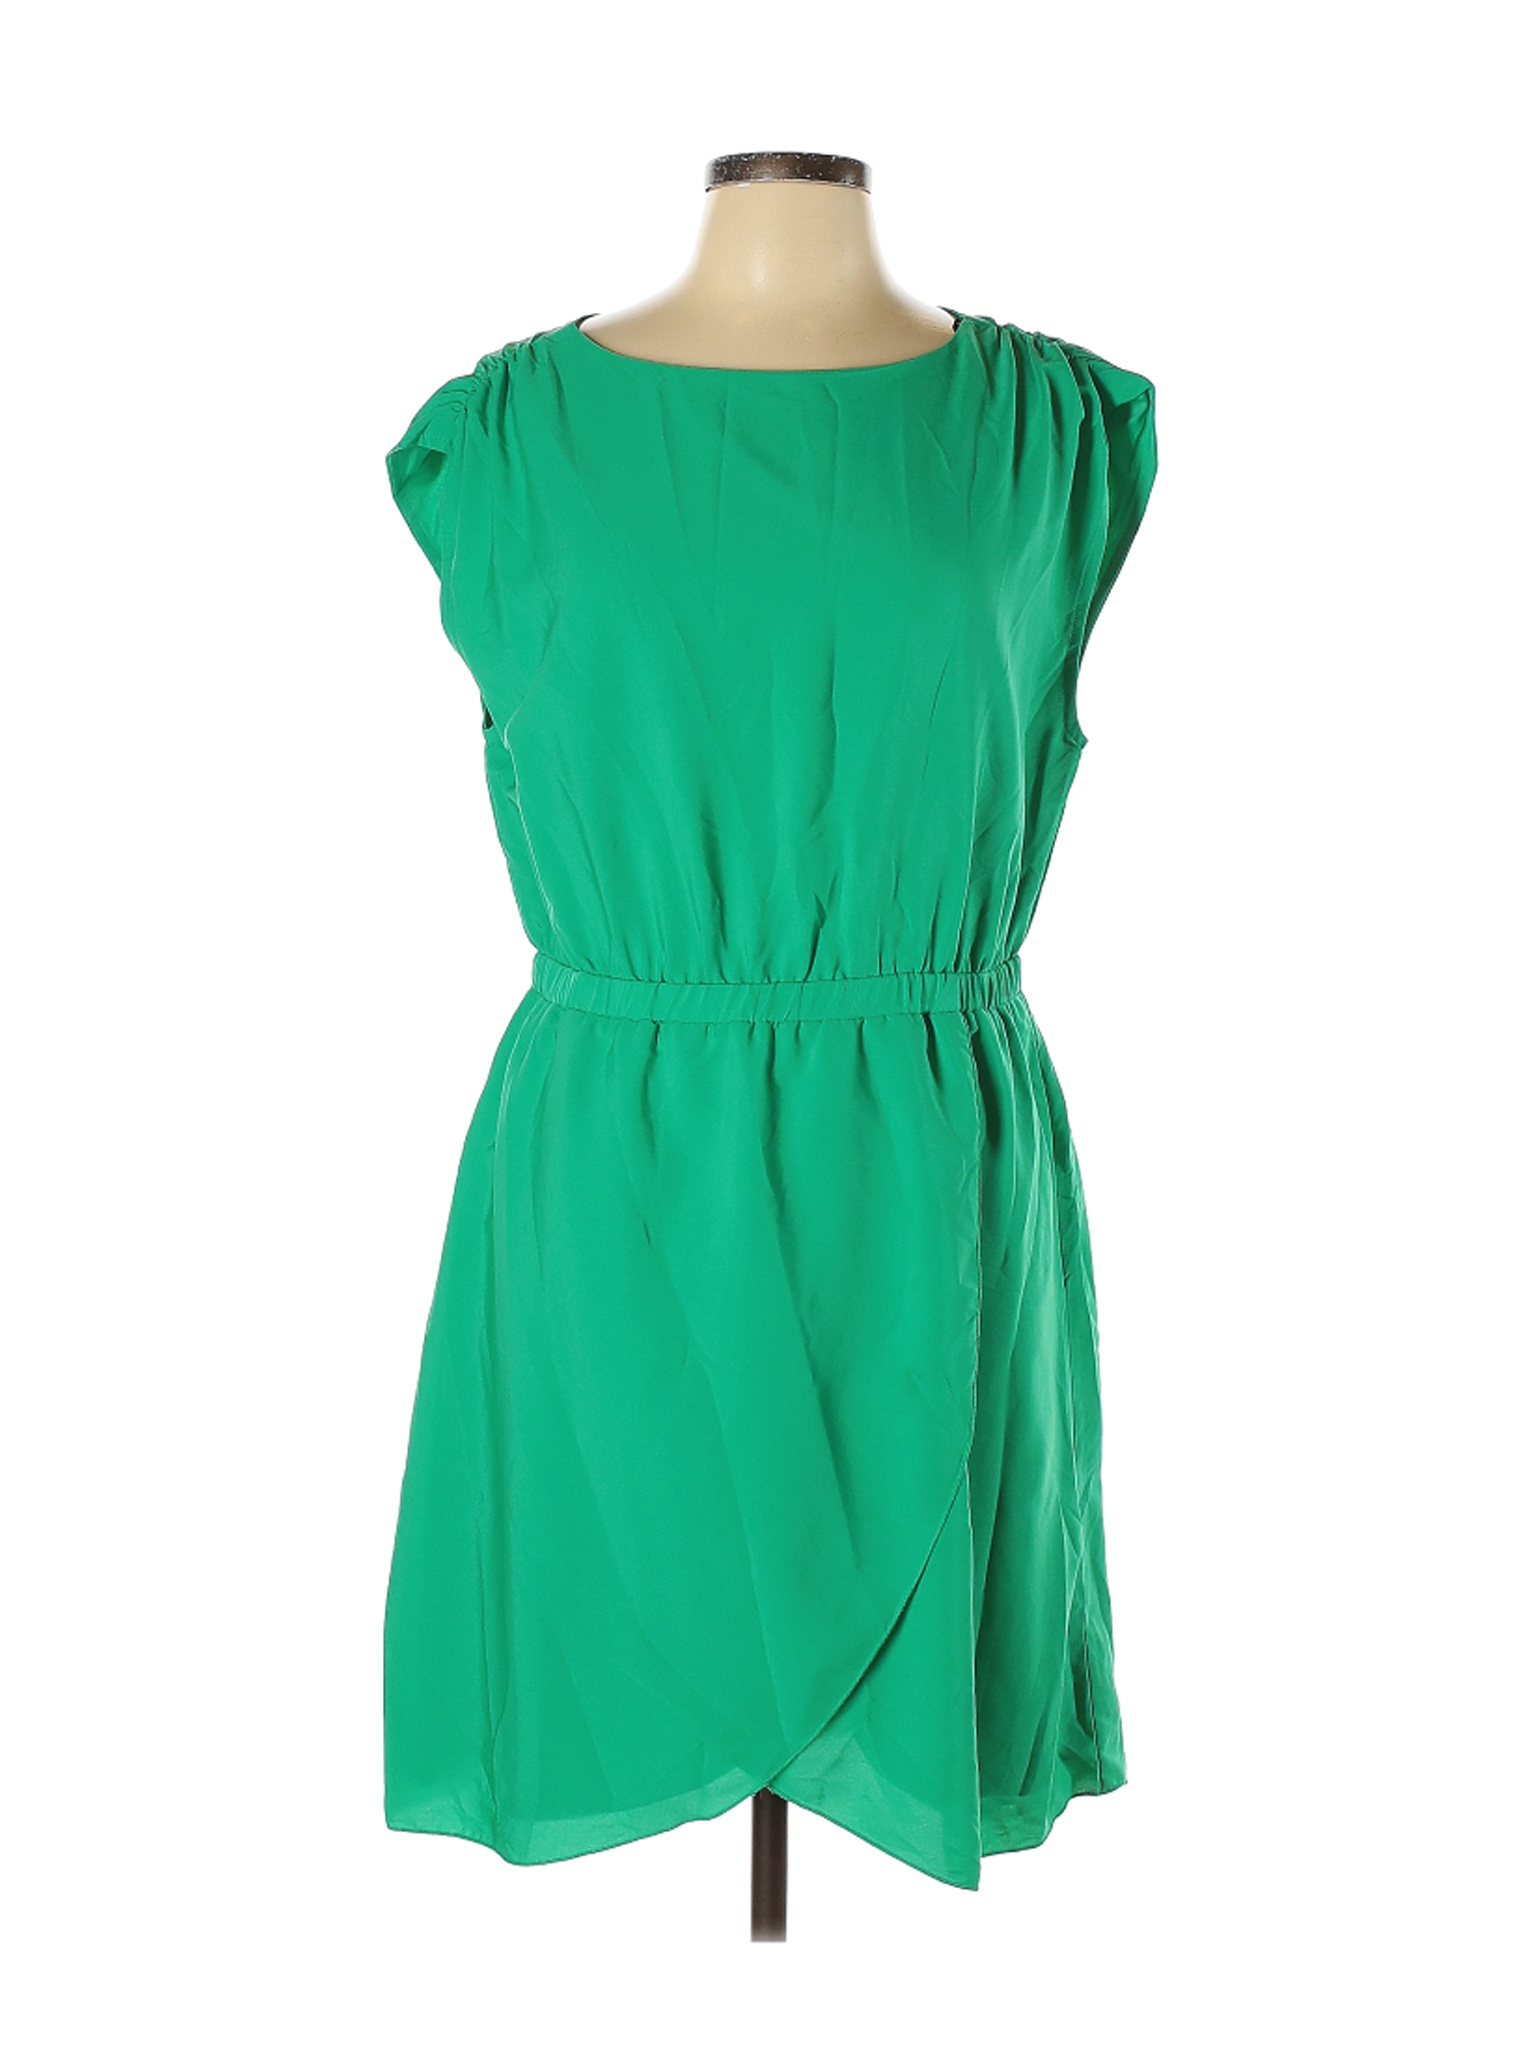 H&M Women Green Casual Dress 12 | eBay